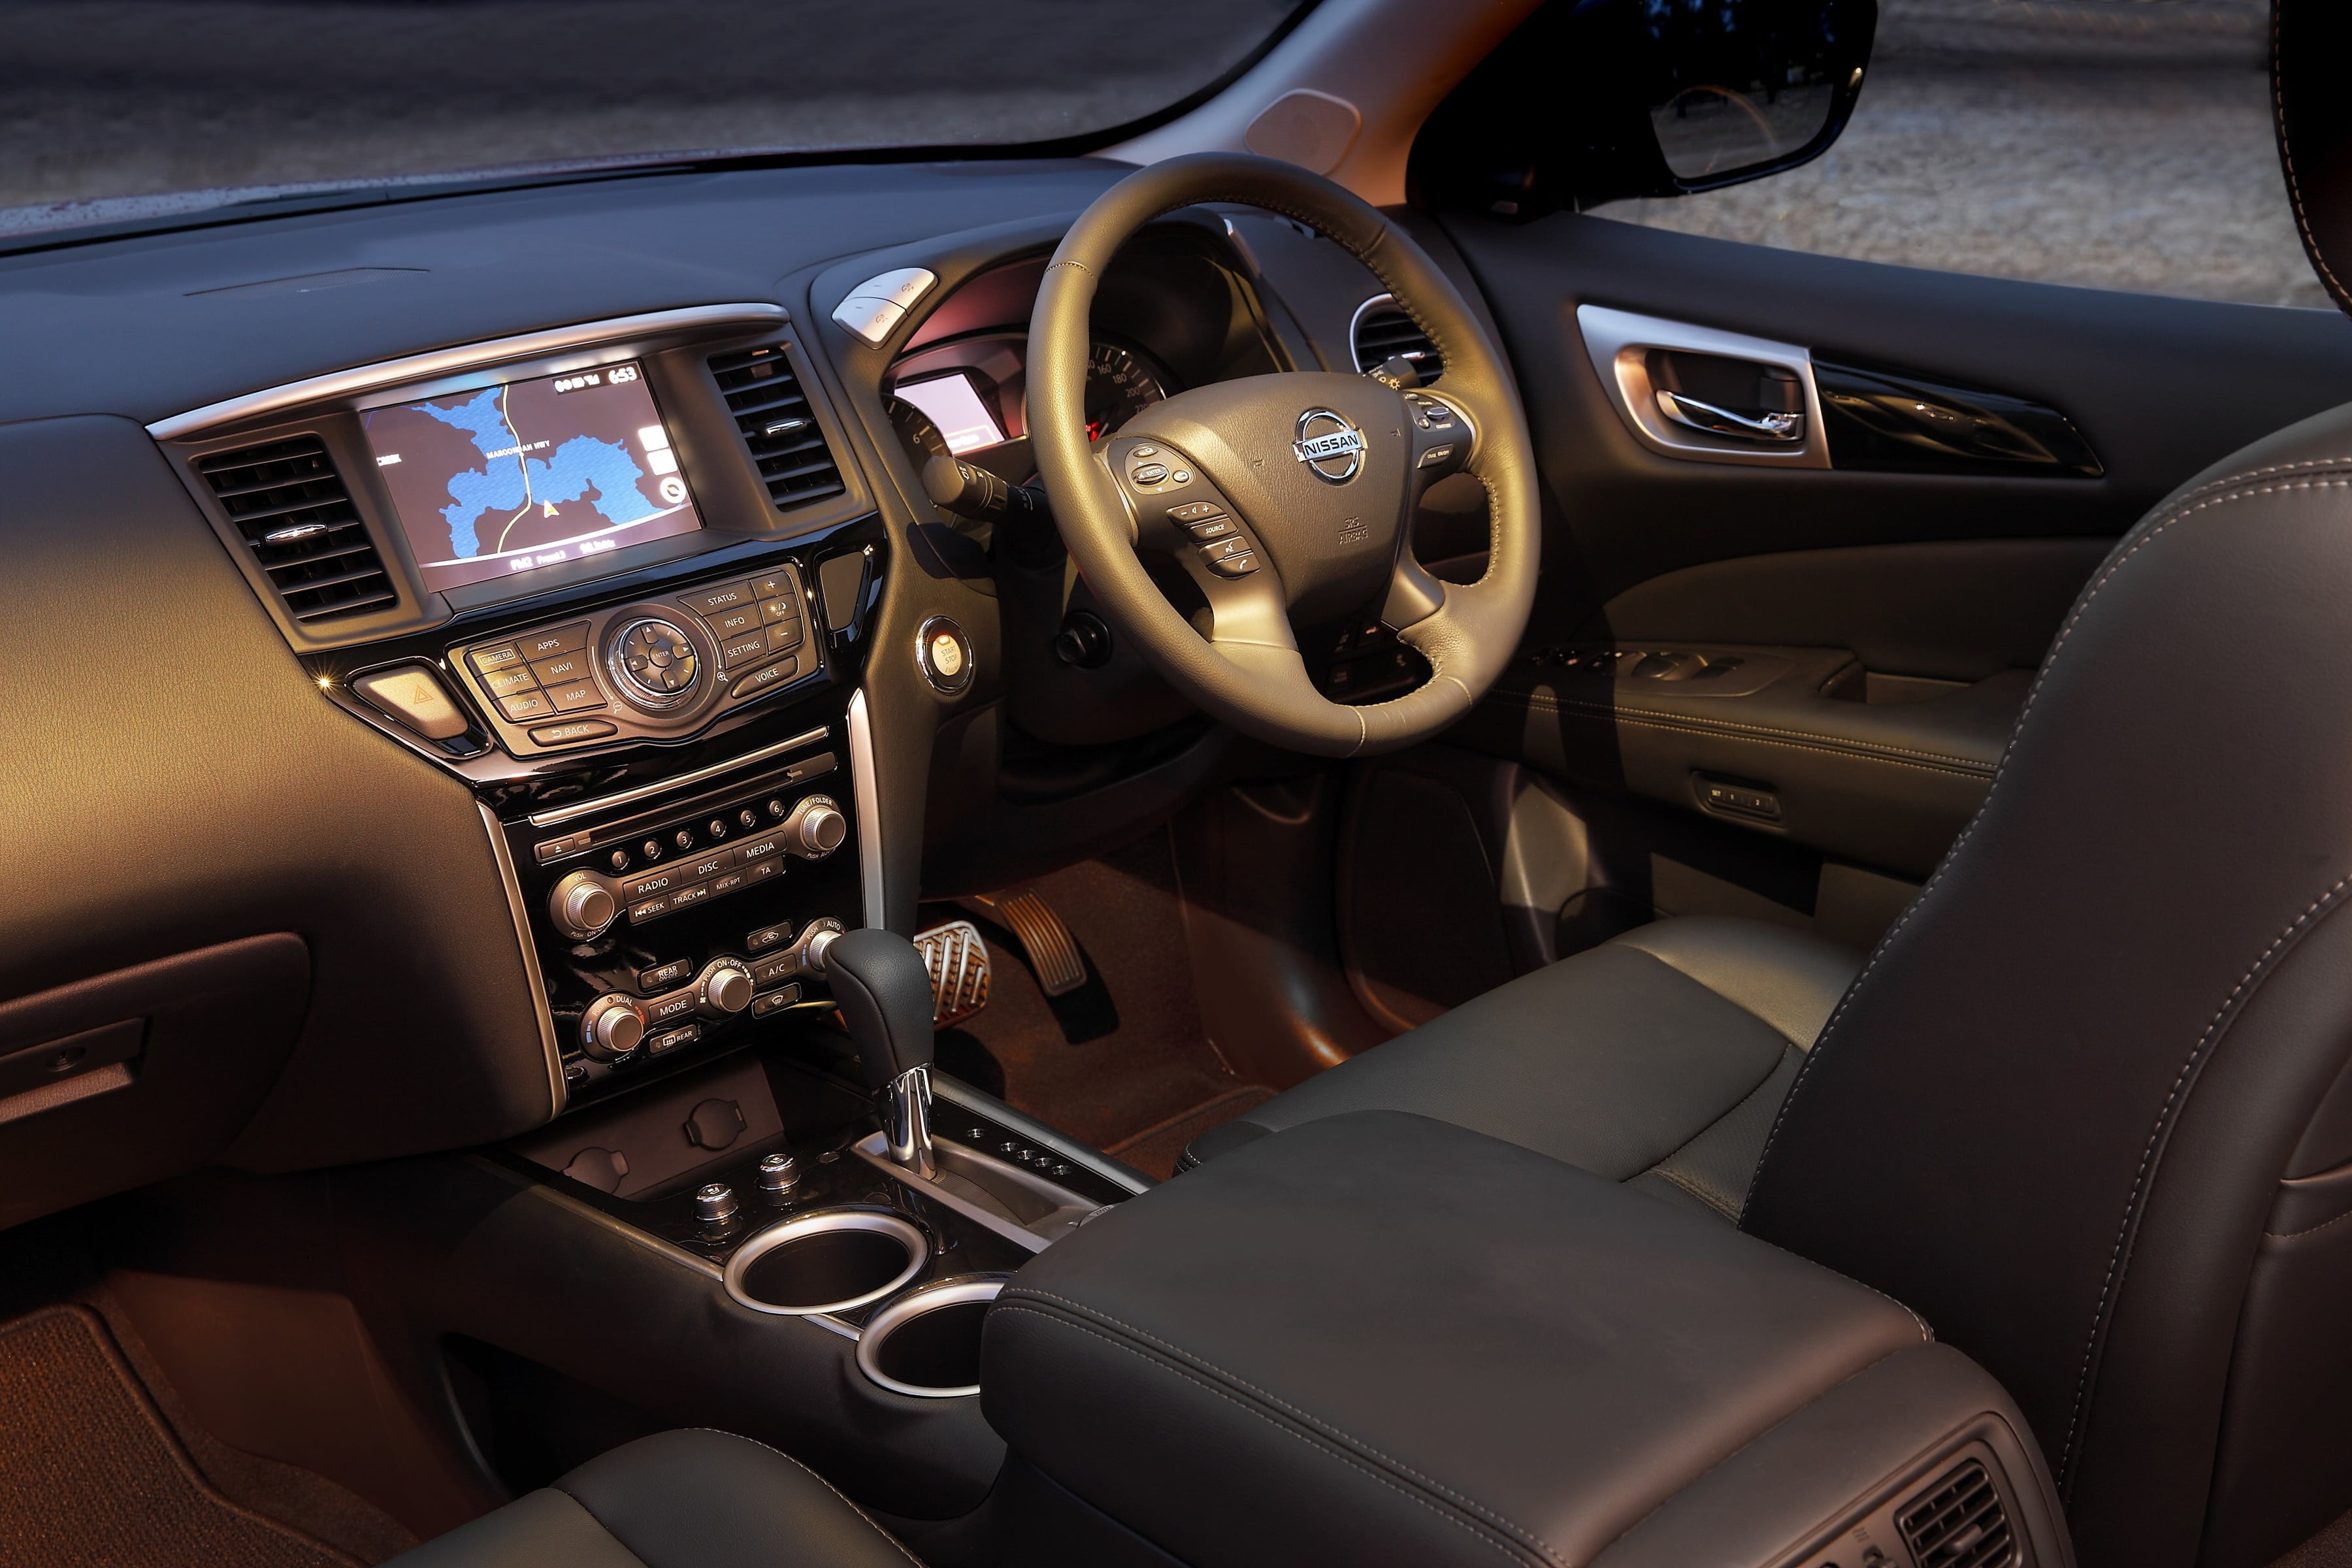 Nissan Pathfinder TI interioe